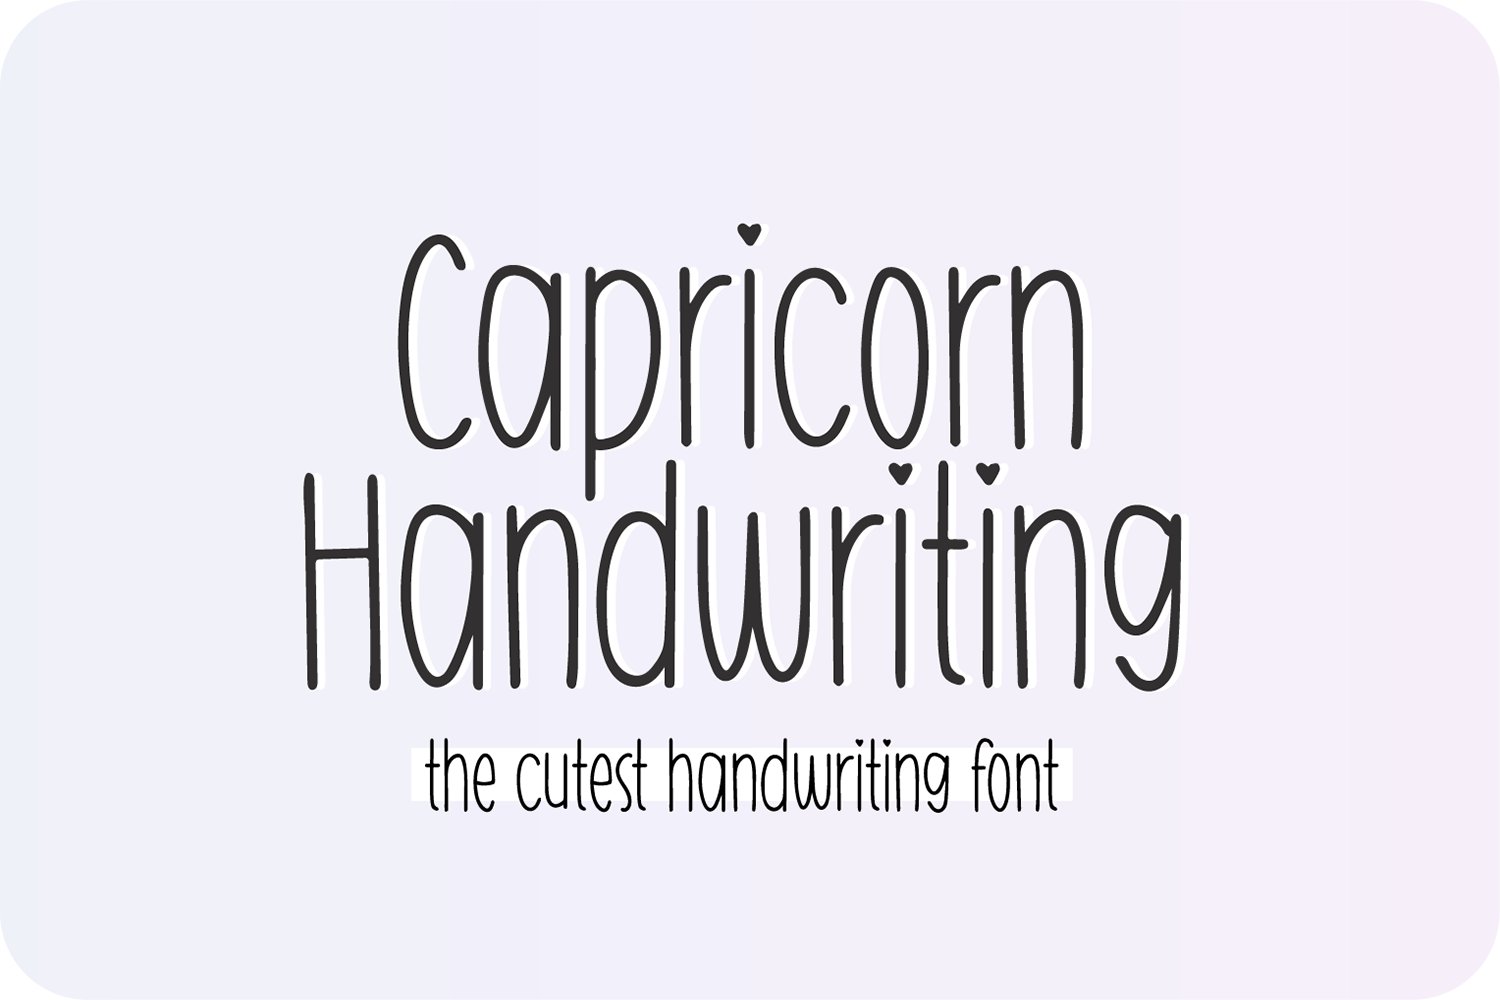 CAPRICORN Skinny Handwriting Font cover image.